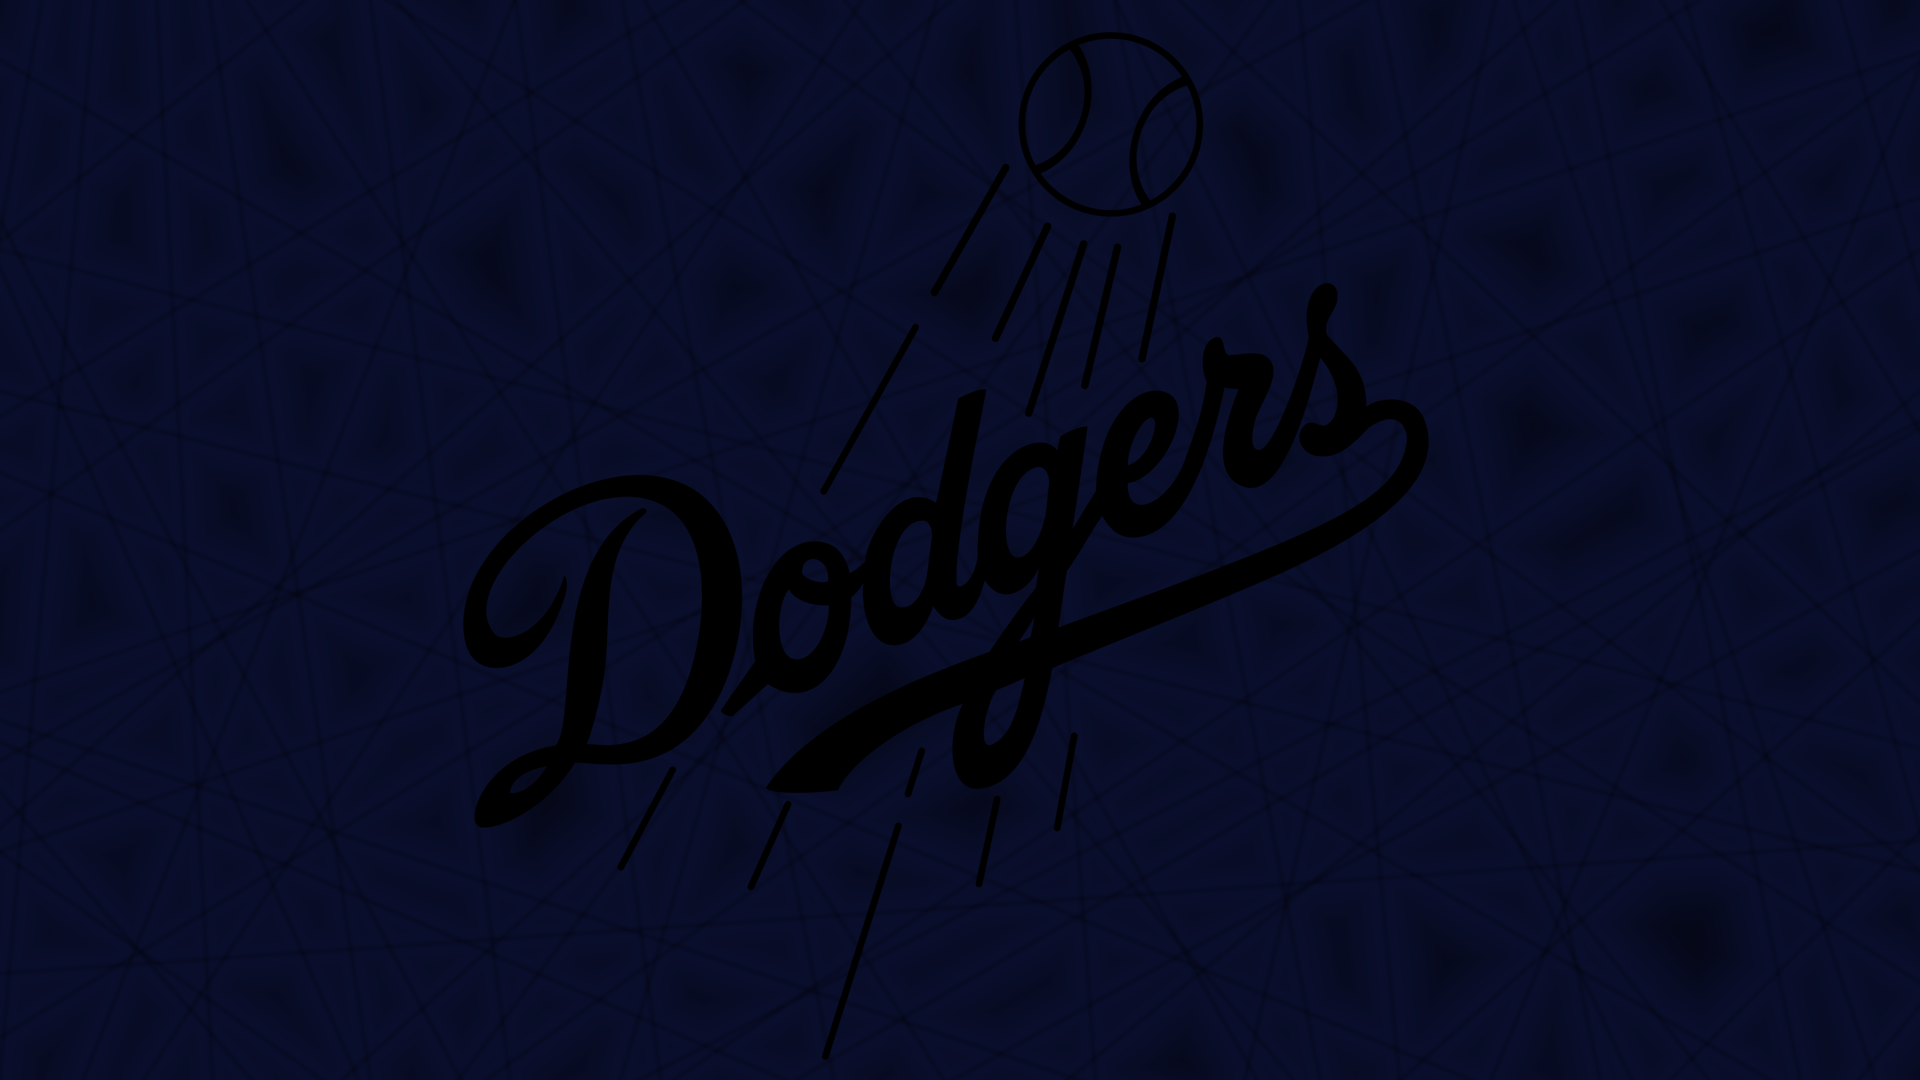 Enjoy this new Los Angeles Dodgers desktop background